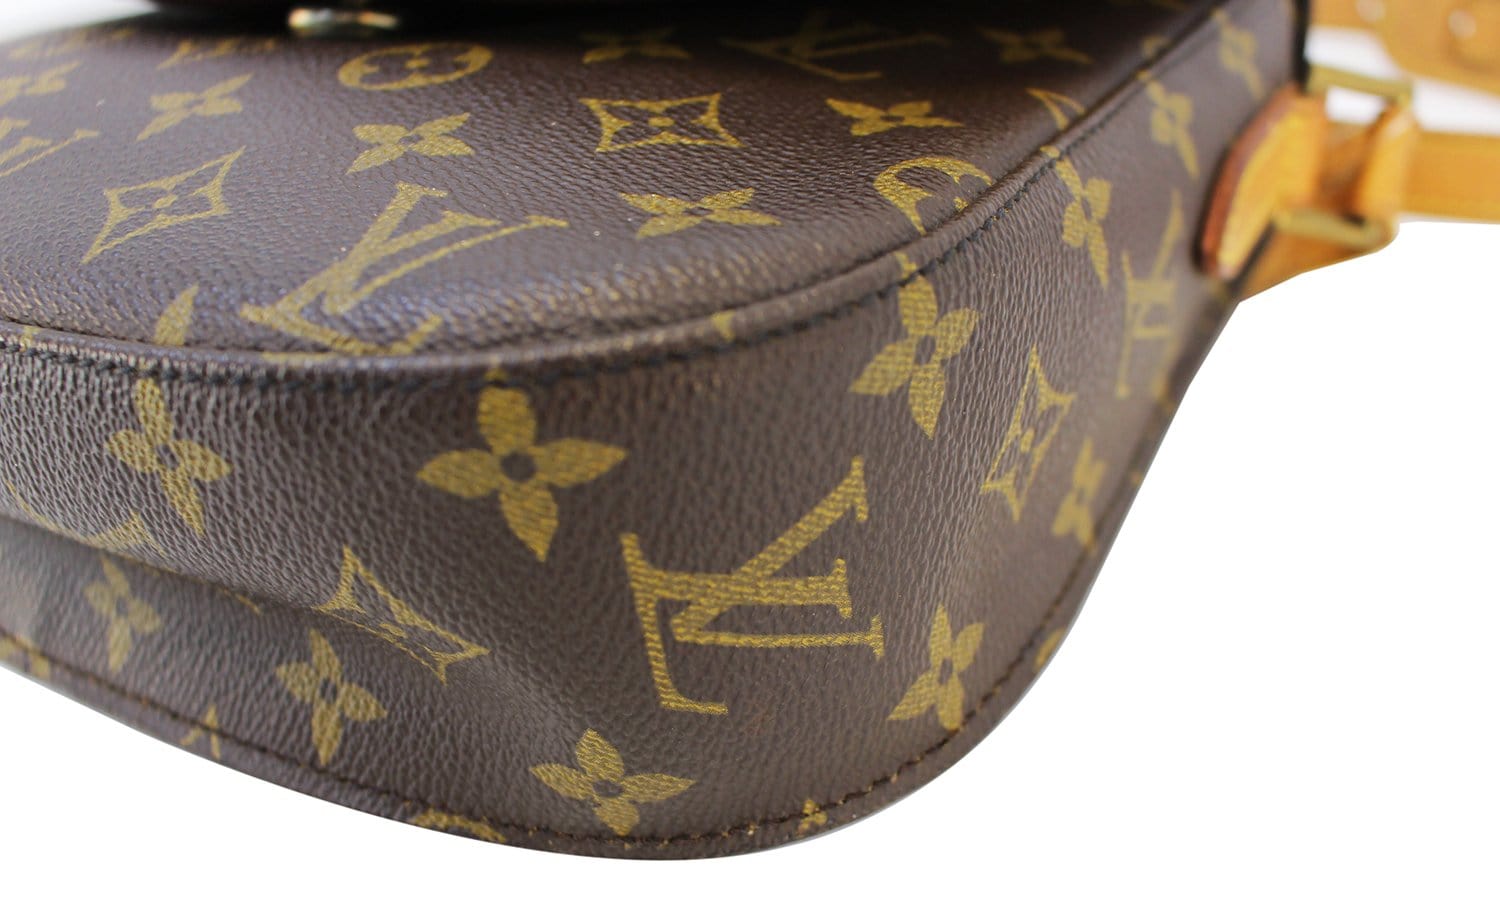 Louis Vuitton Monogram Sunru GM Shoulder Bag